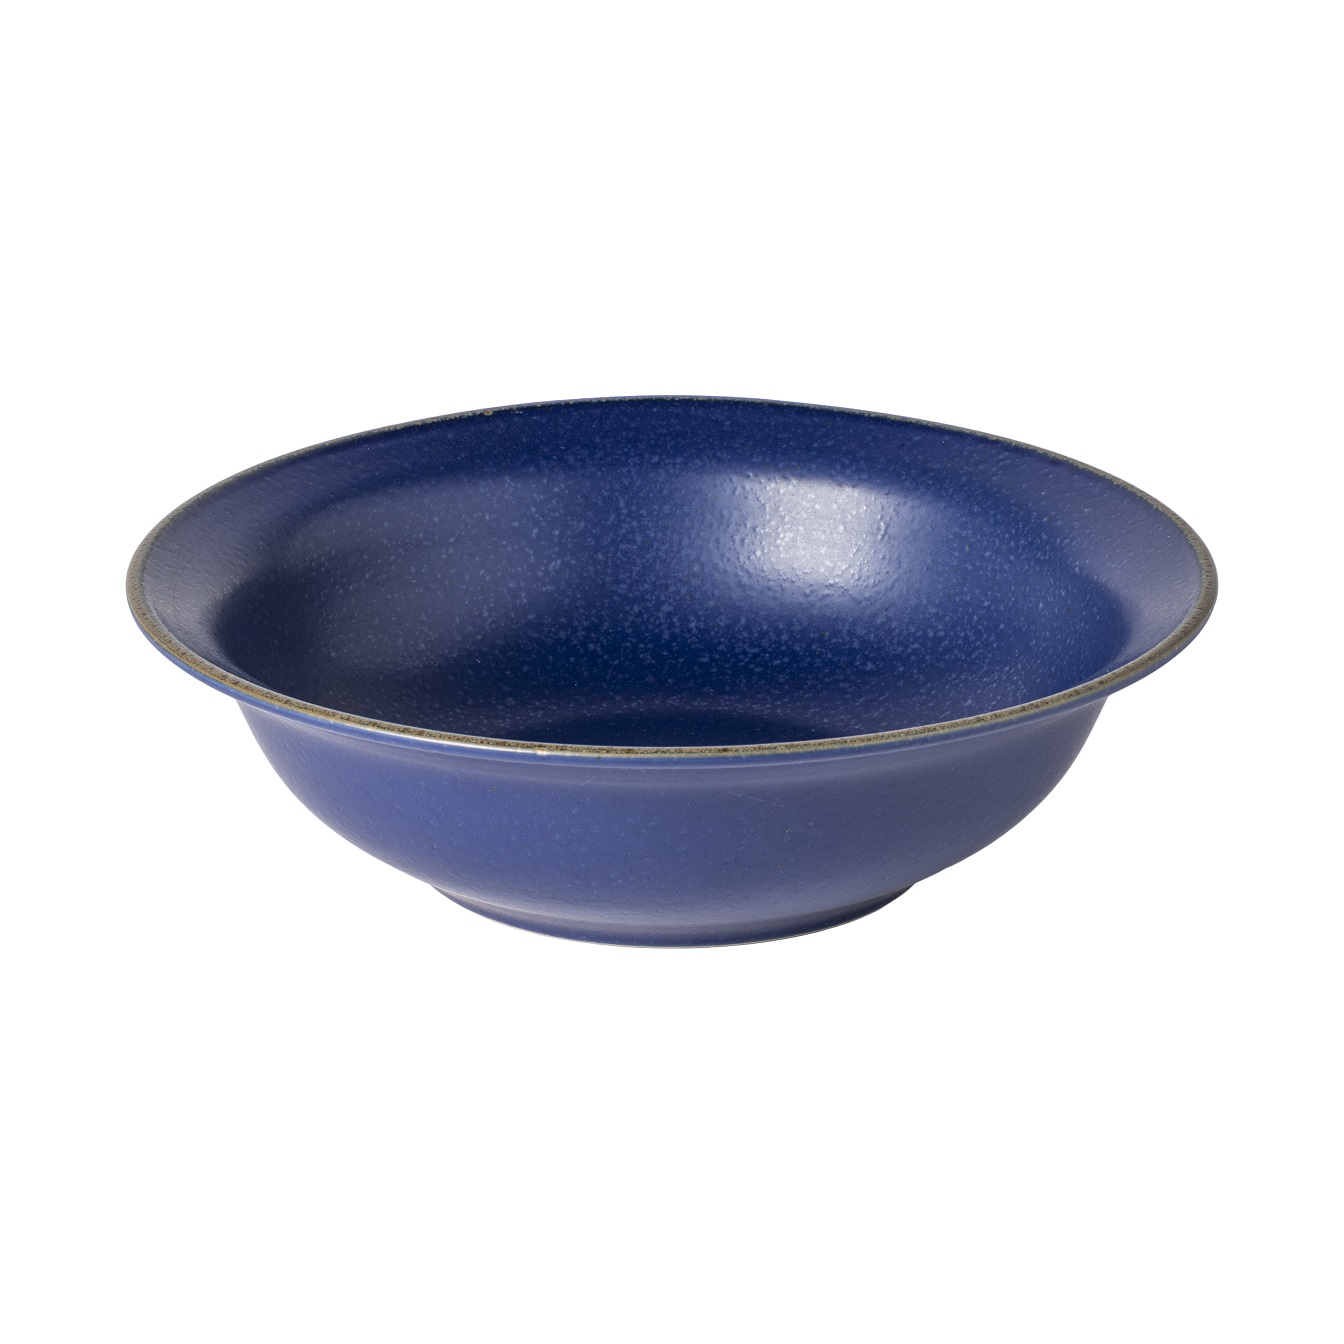 Positano Blue Serving Bowl 28cm Gift